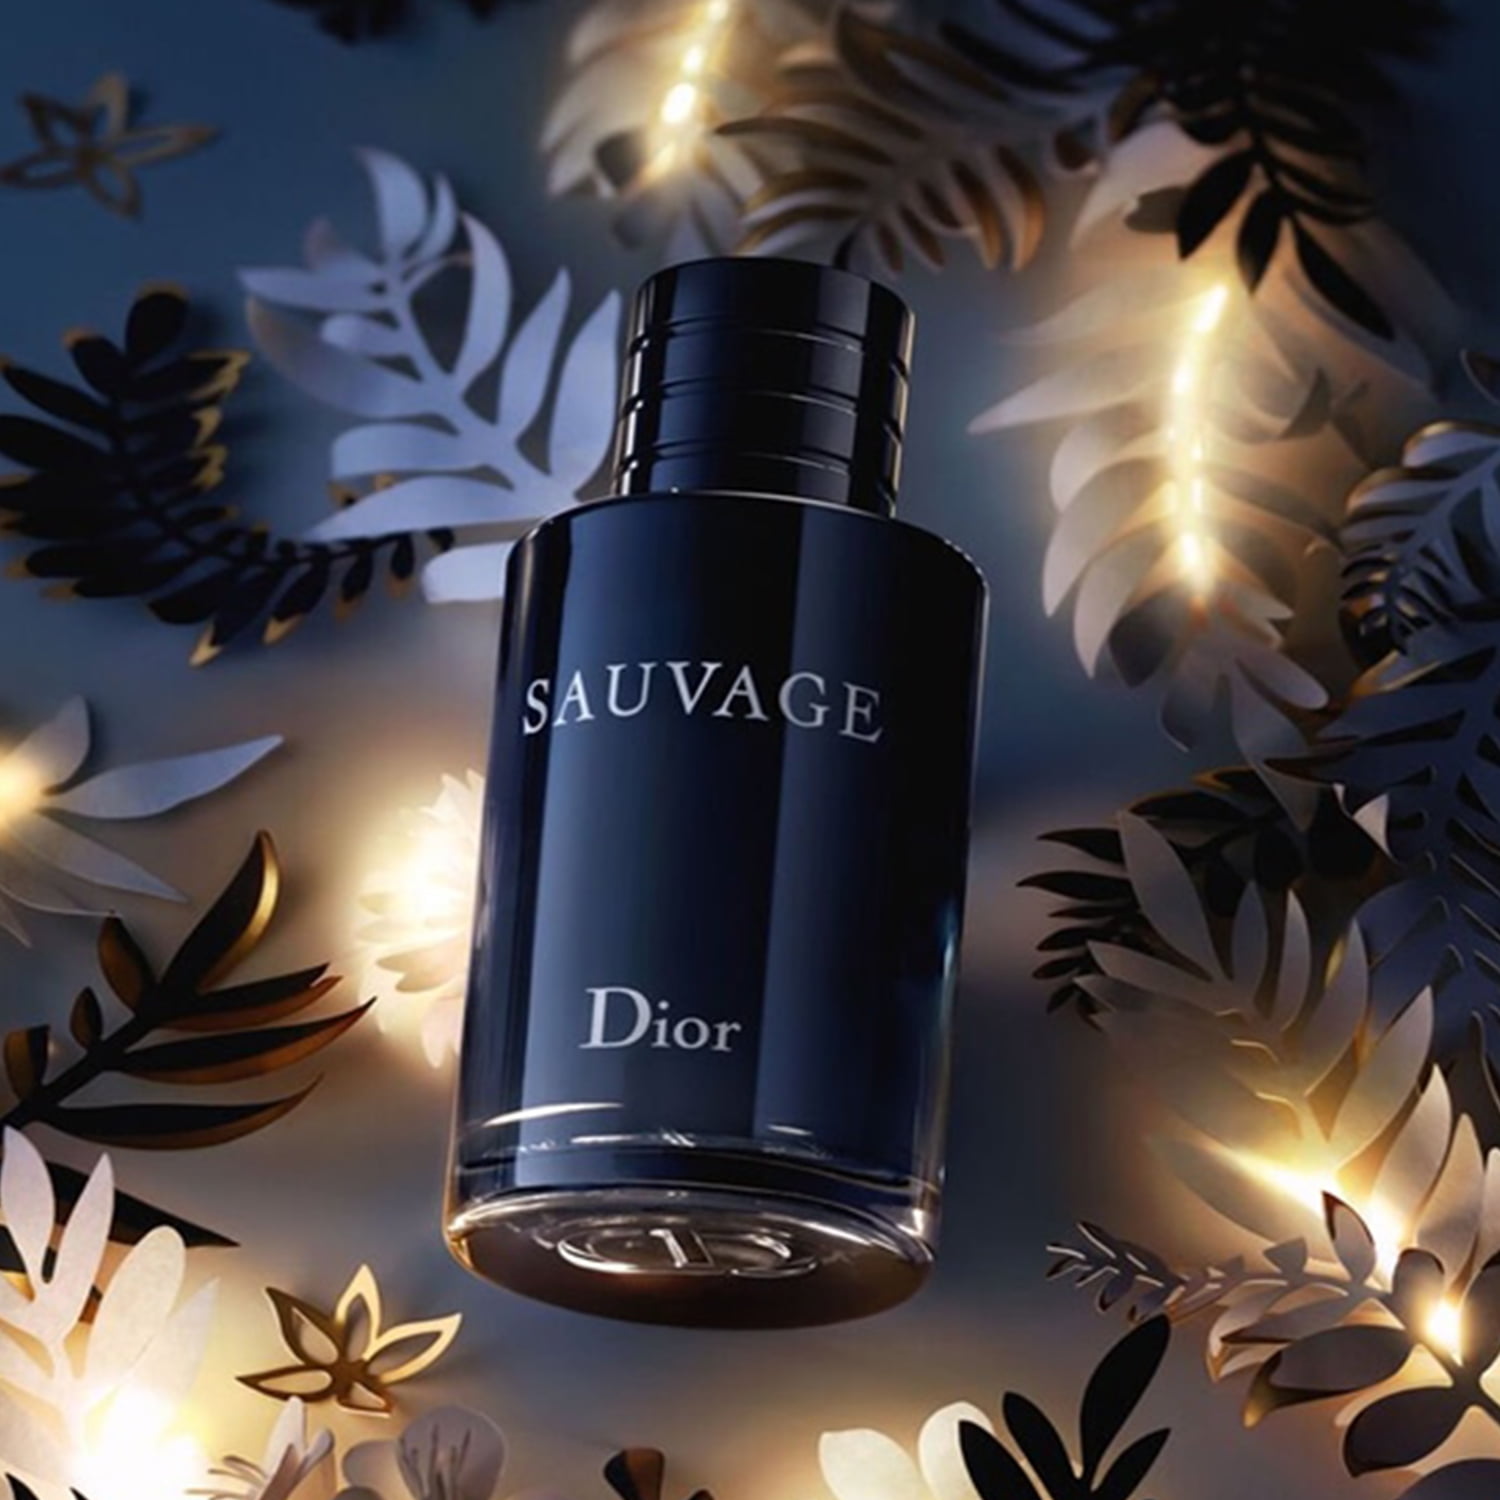 Christian Dior Eau Sauvage 'wild Water' 60 Ml. or 2 